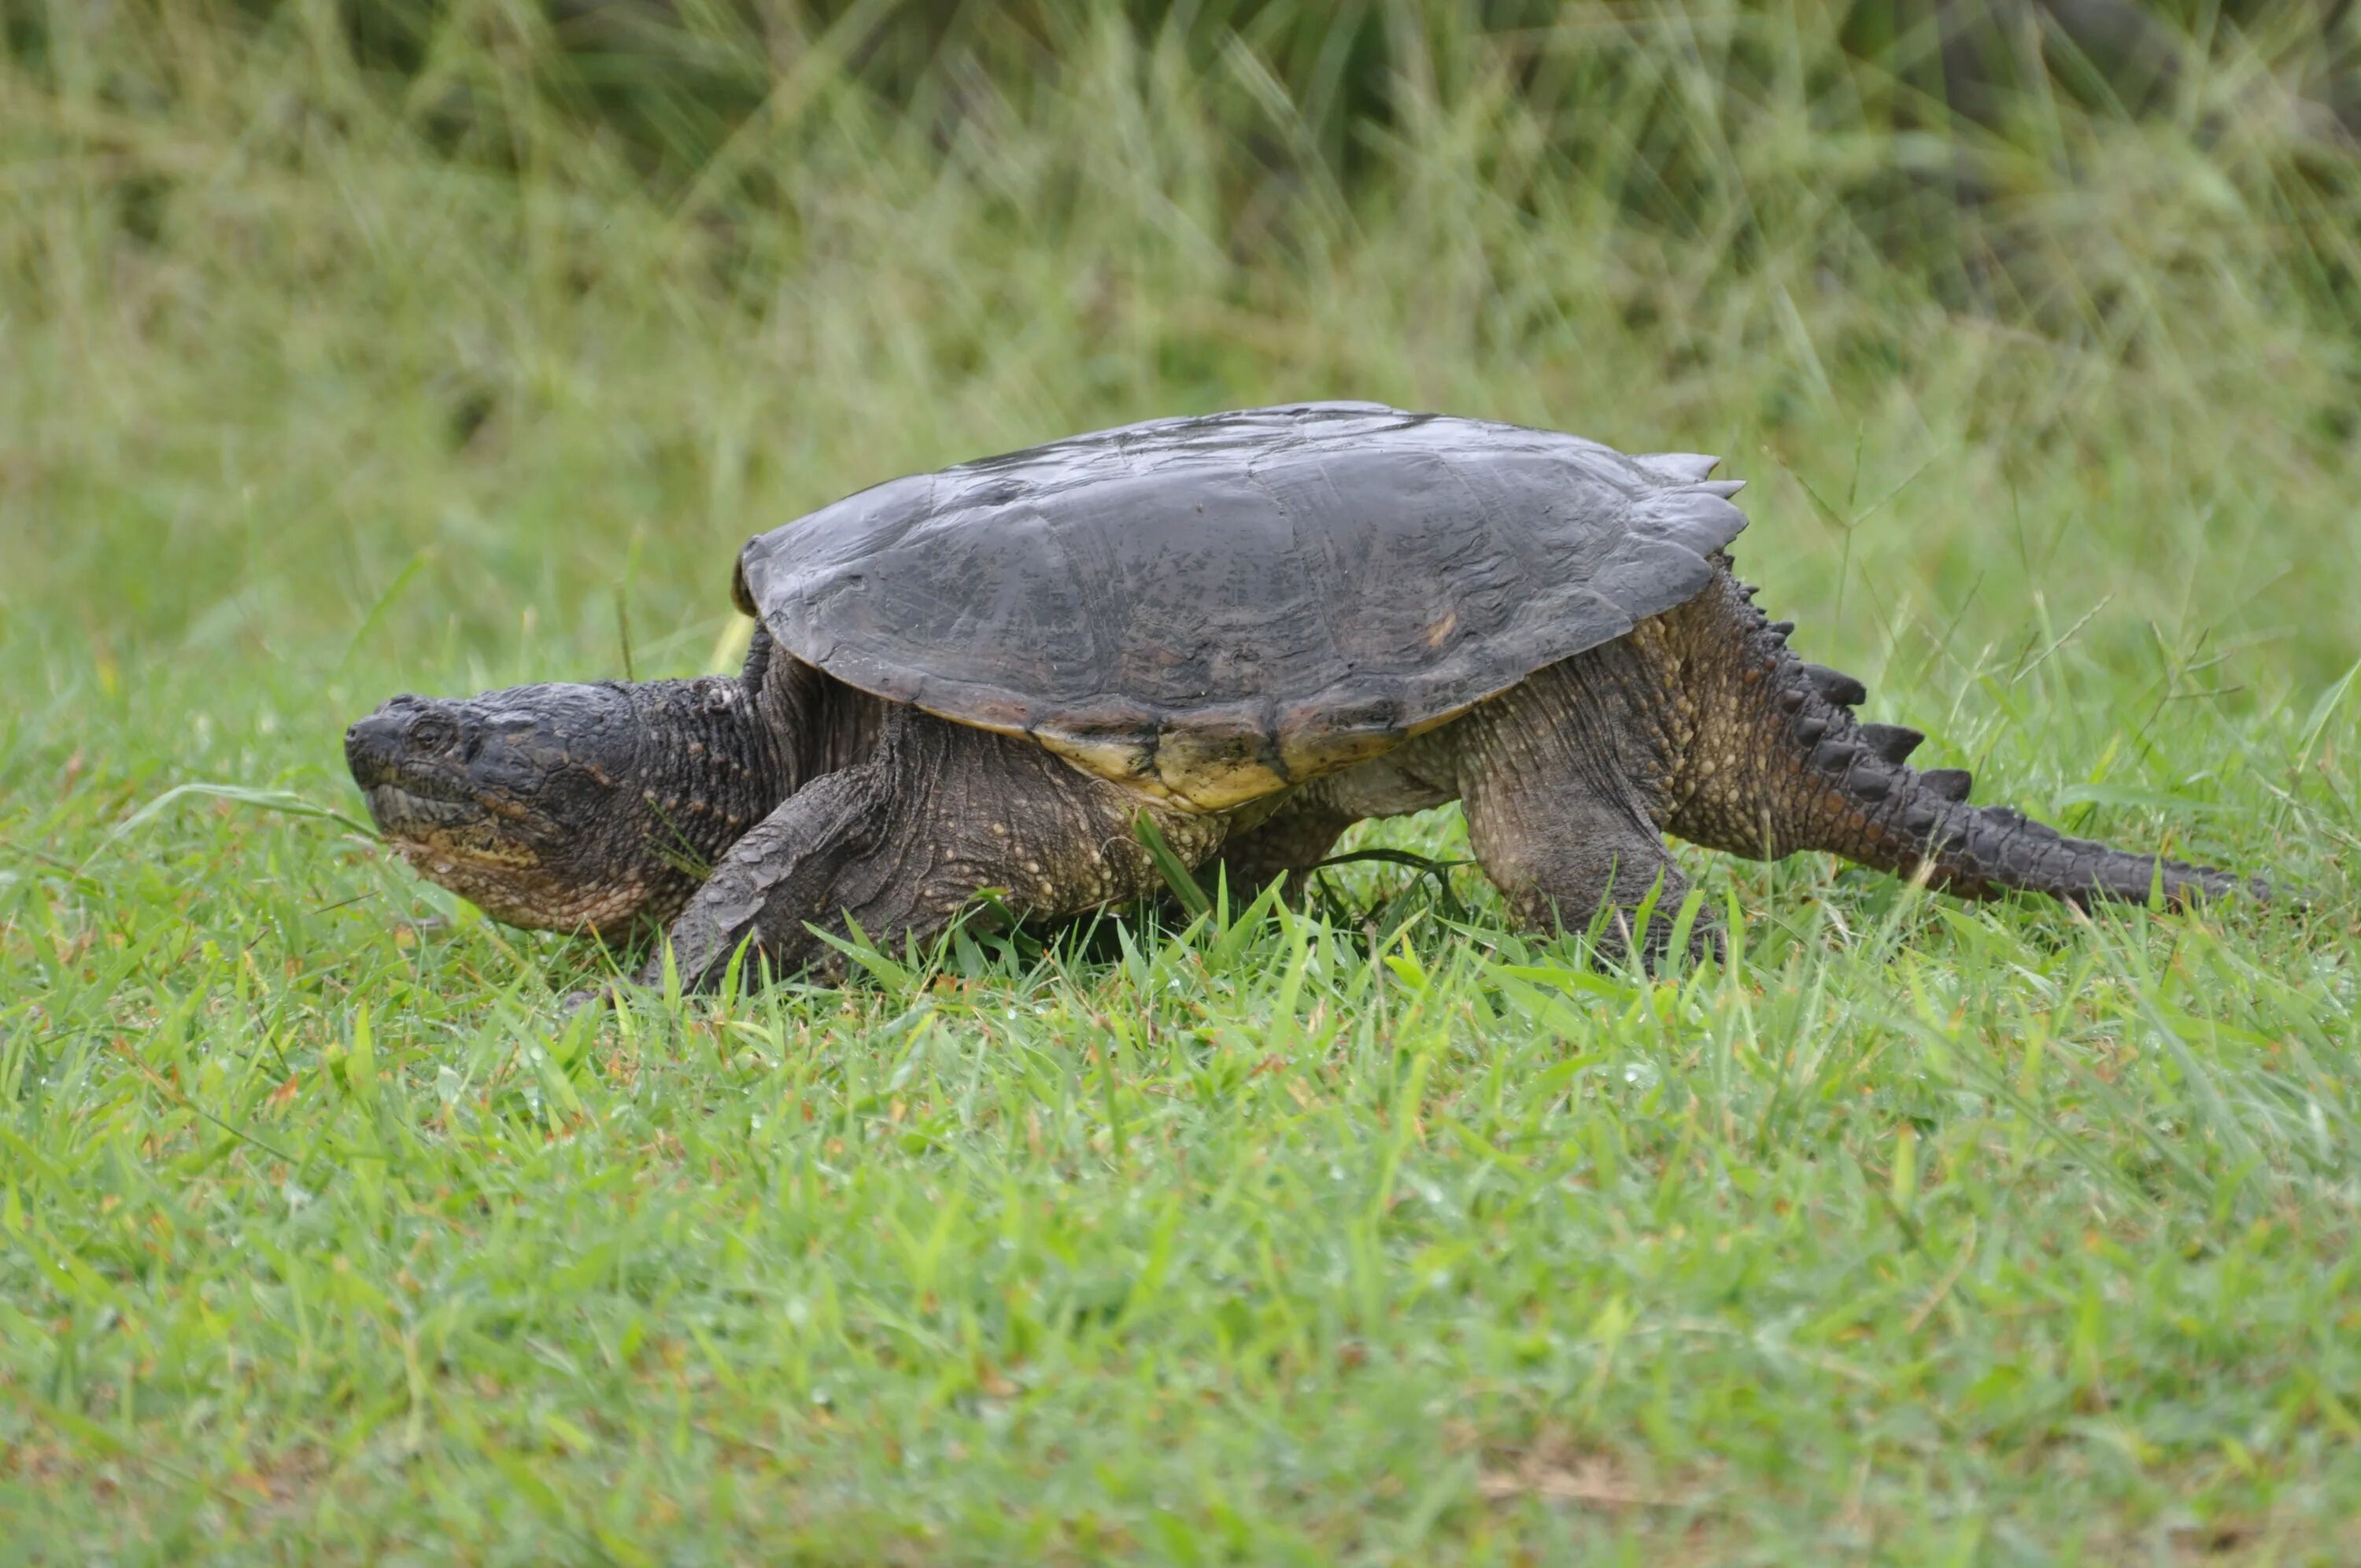 Left turtle. Каймановые черепахи (Chelydridae). Каймановая черепаха (Chelydra serpentina). Миссисипская черепаха. Грифовая черепаха.